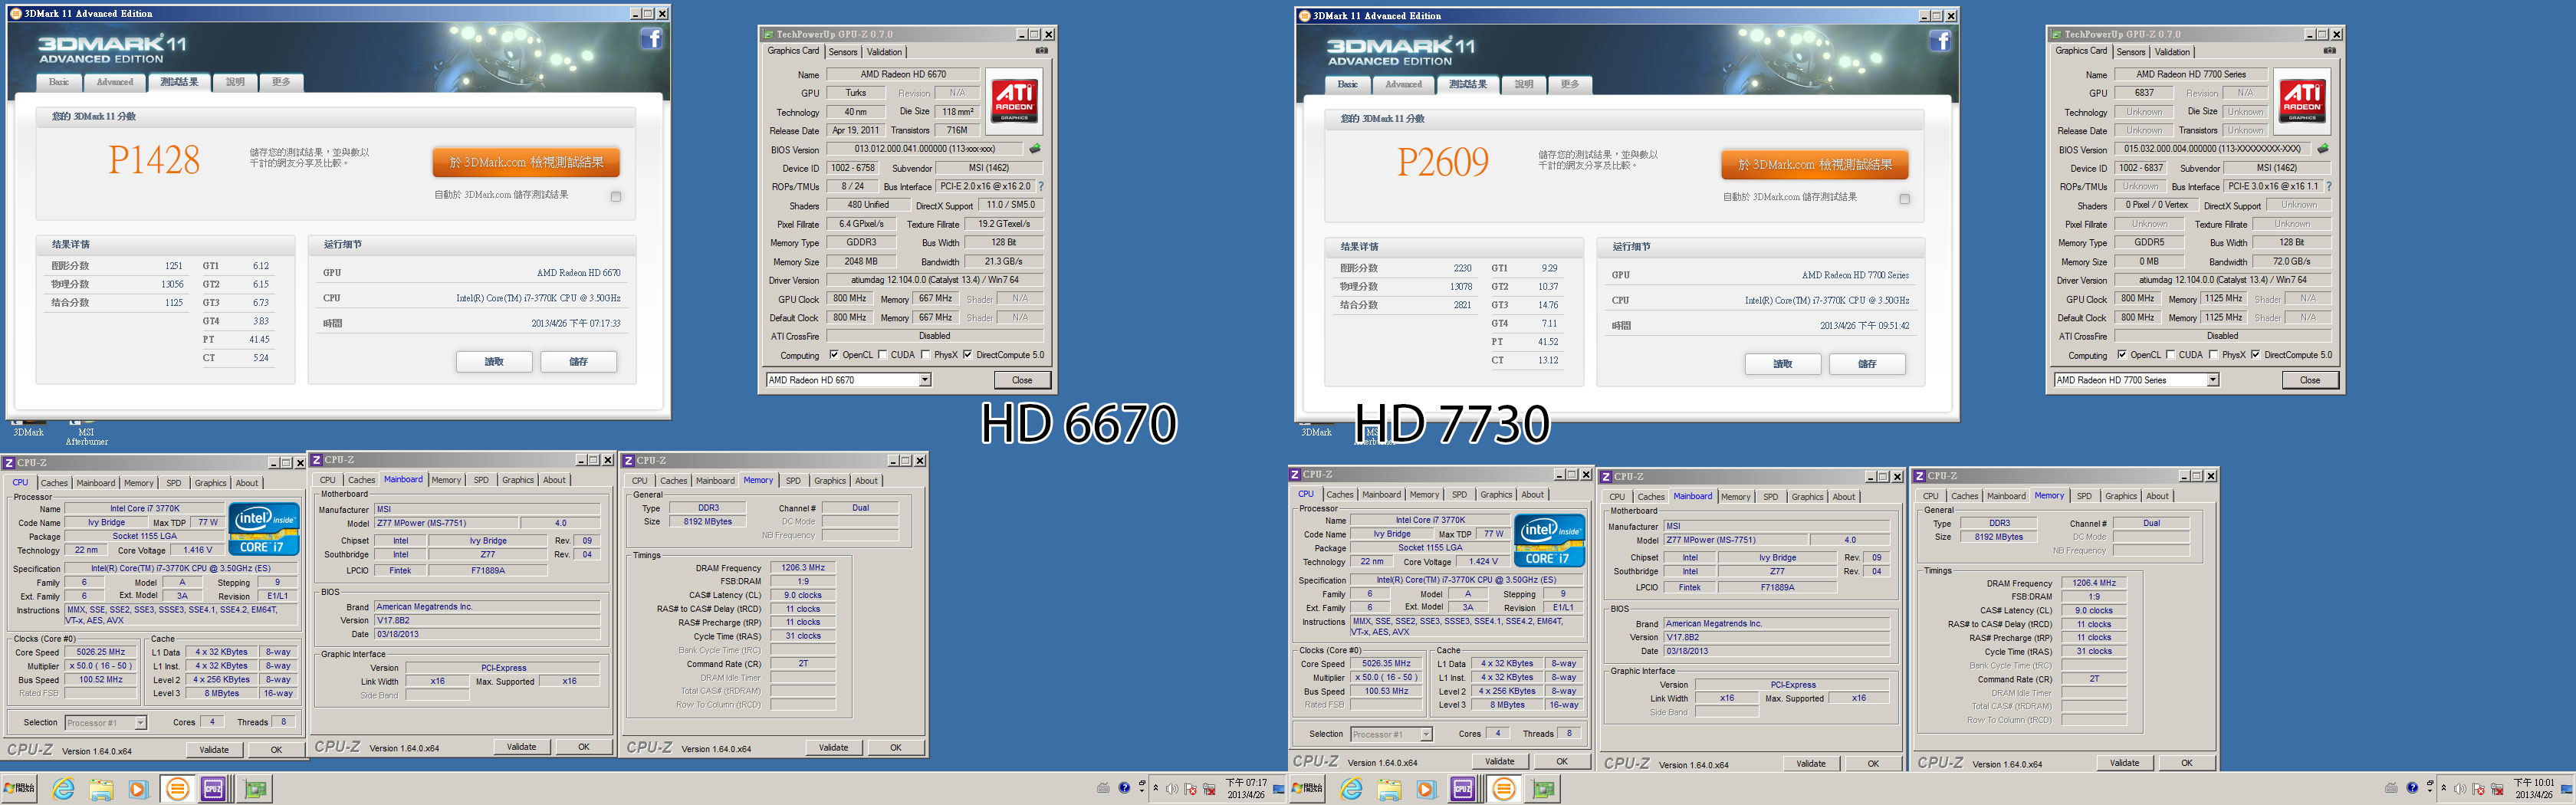 Media asset in full size related to 3dfxzone.it news item entitled as follows: Foto e benchmark della video card Radeon HD 7730 di MSI | Image Name: news19437_MSI-Radeon-HD-7730_6.jpg